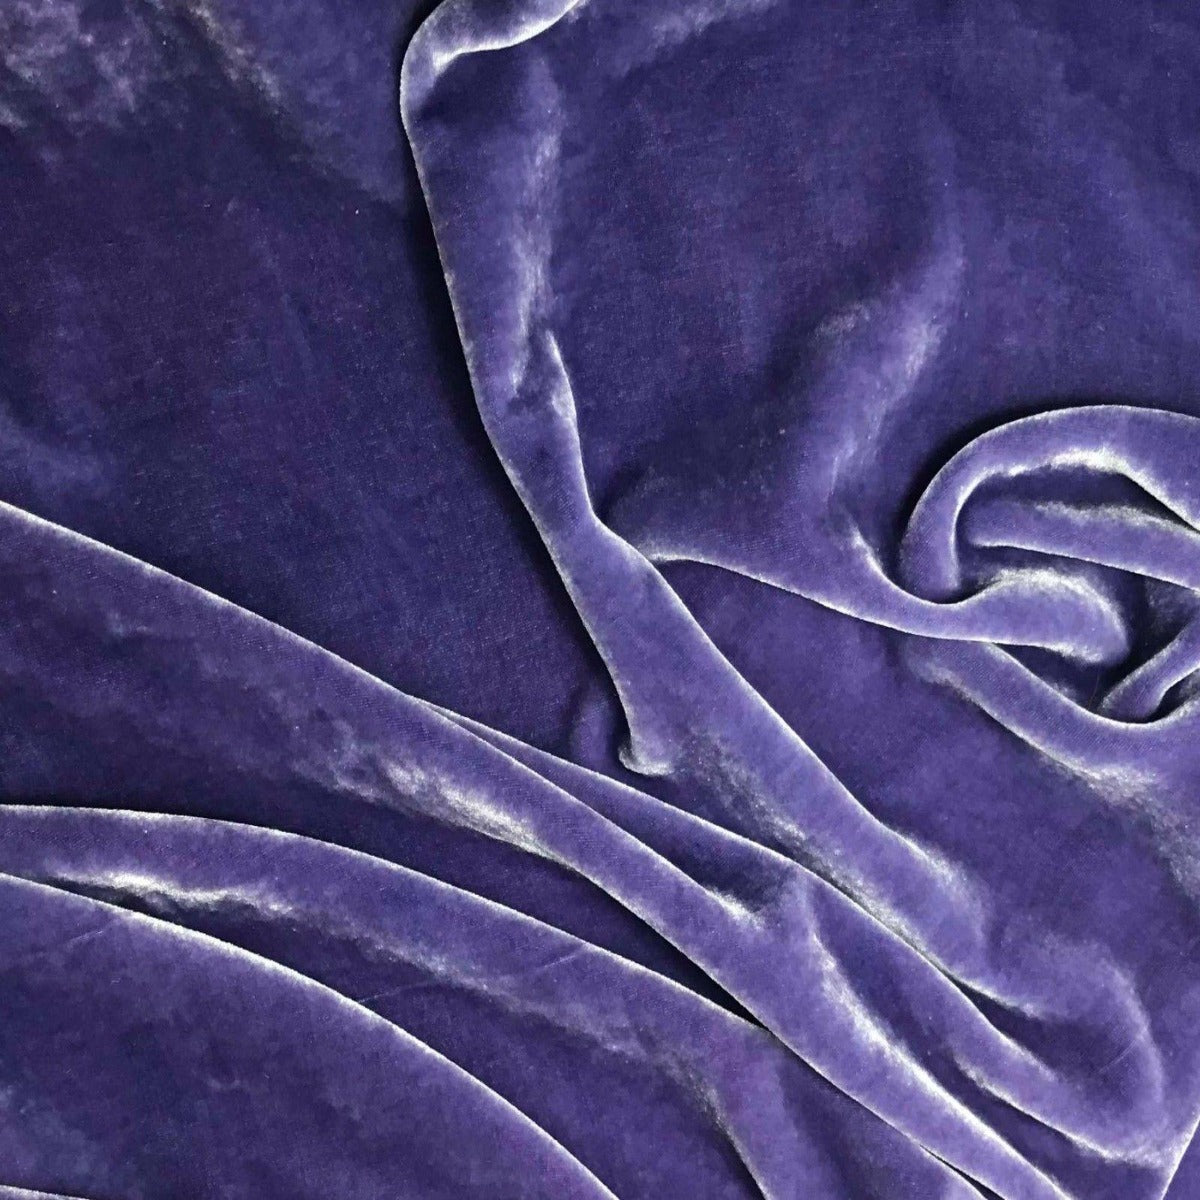 Lavender Silk Velvet Fabric - Fashion Fabrics Los Angeles 